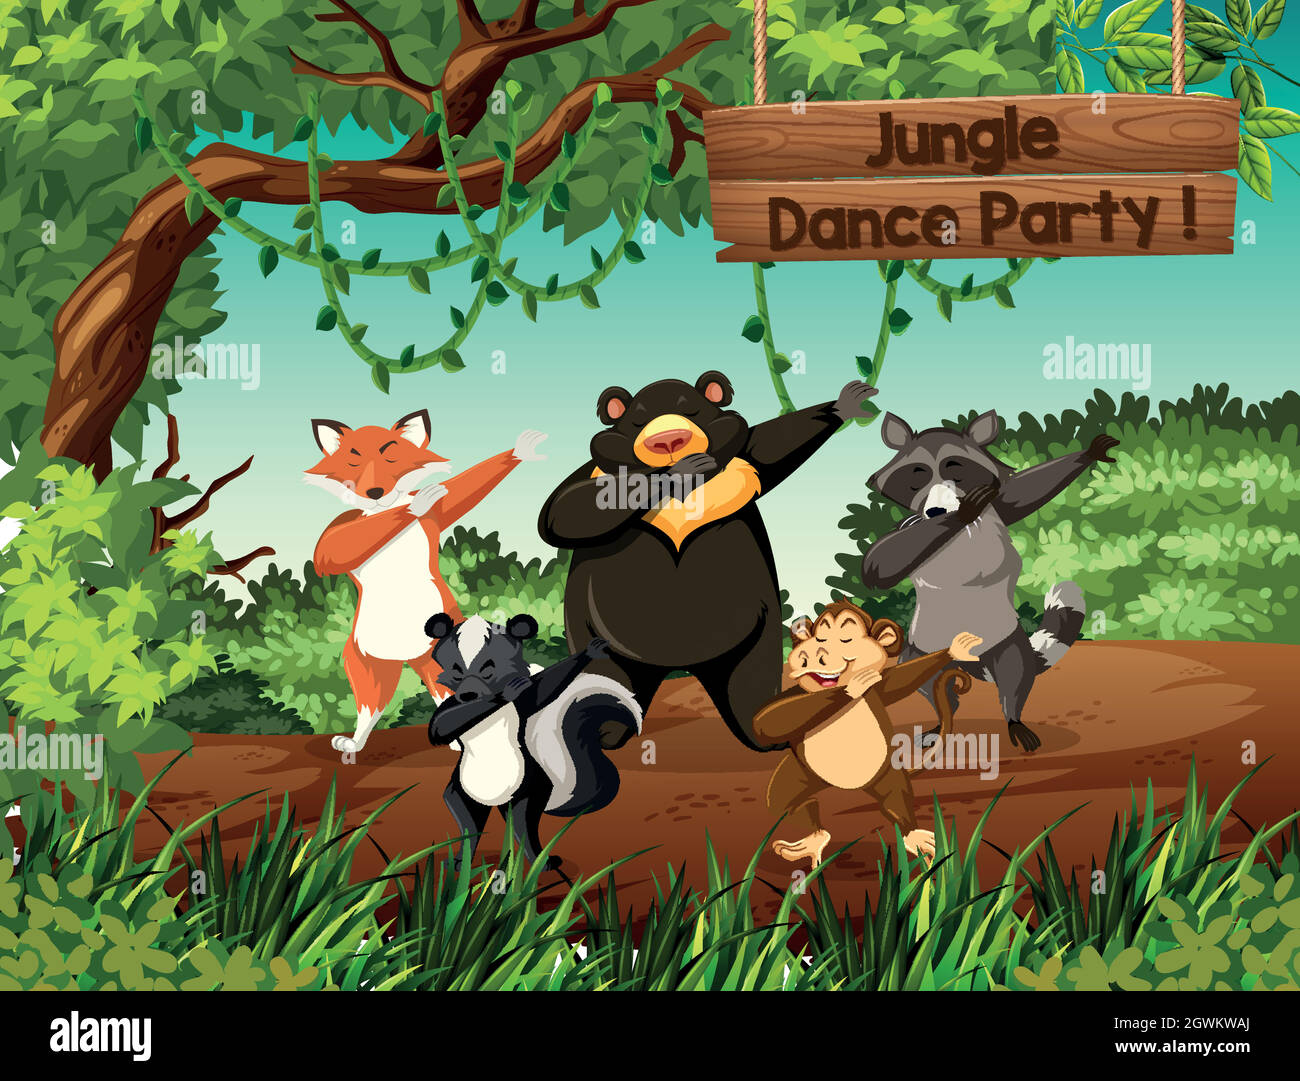 Wild animals jungle dance party Stock Vector